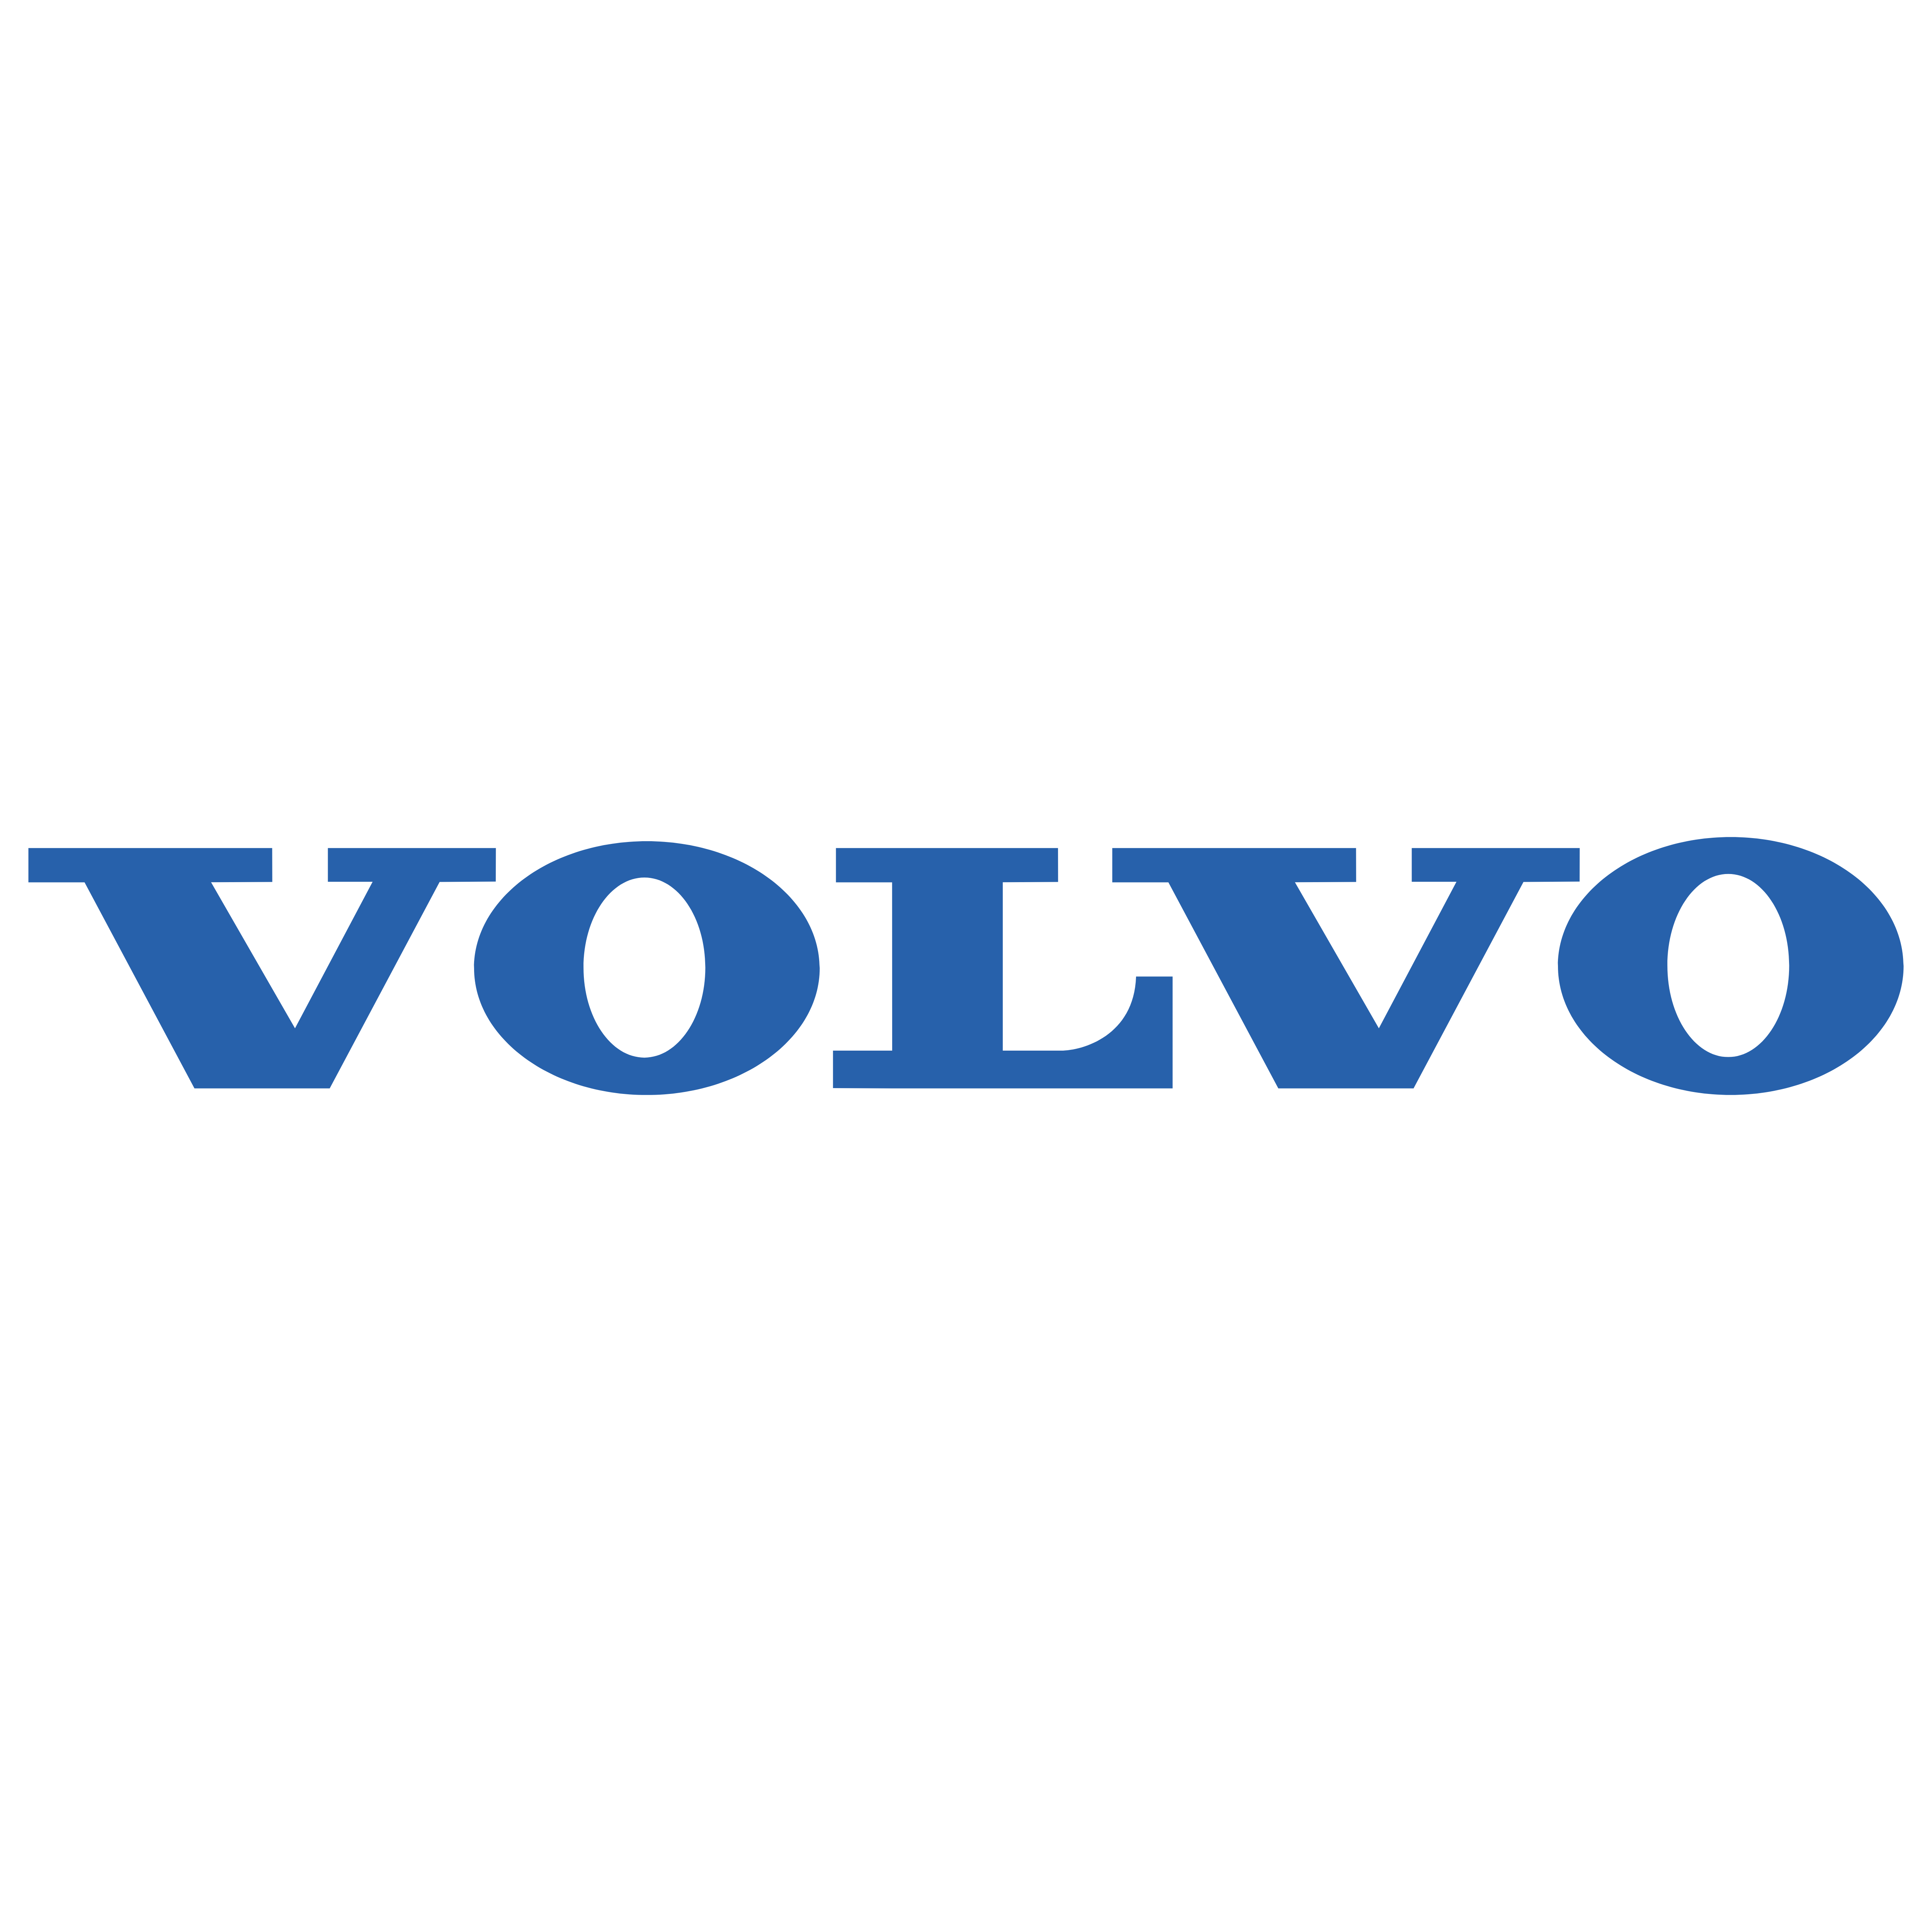 Volvo Logo Png - Volvo Logos 